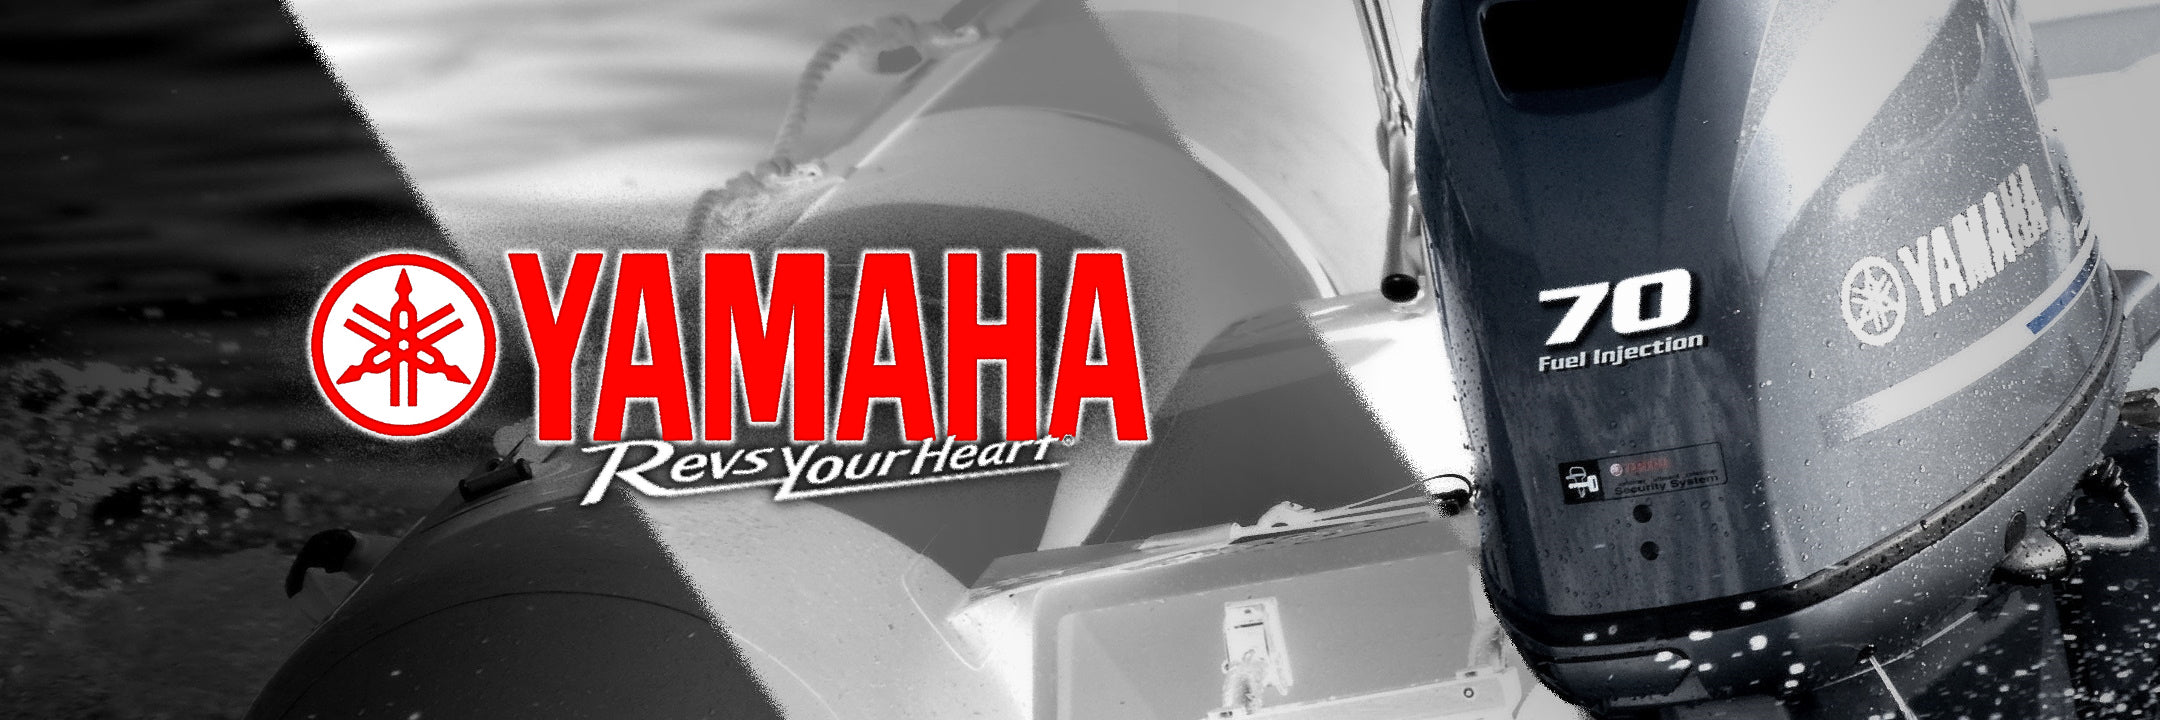 Showcasing Yamaha 70hp outboard